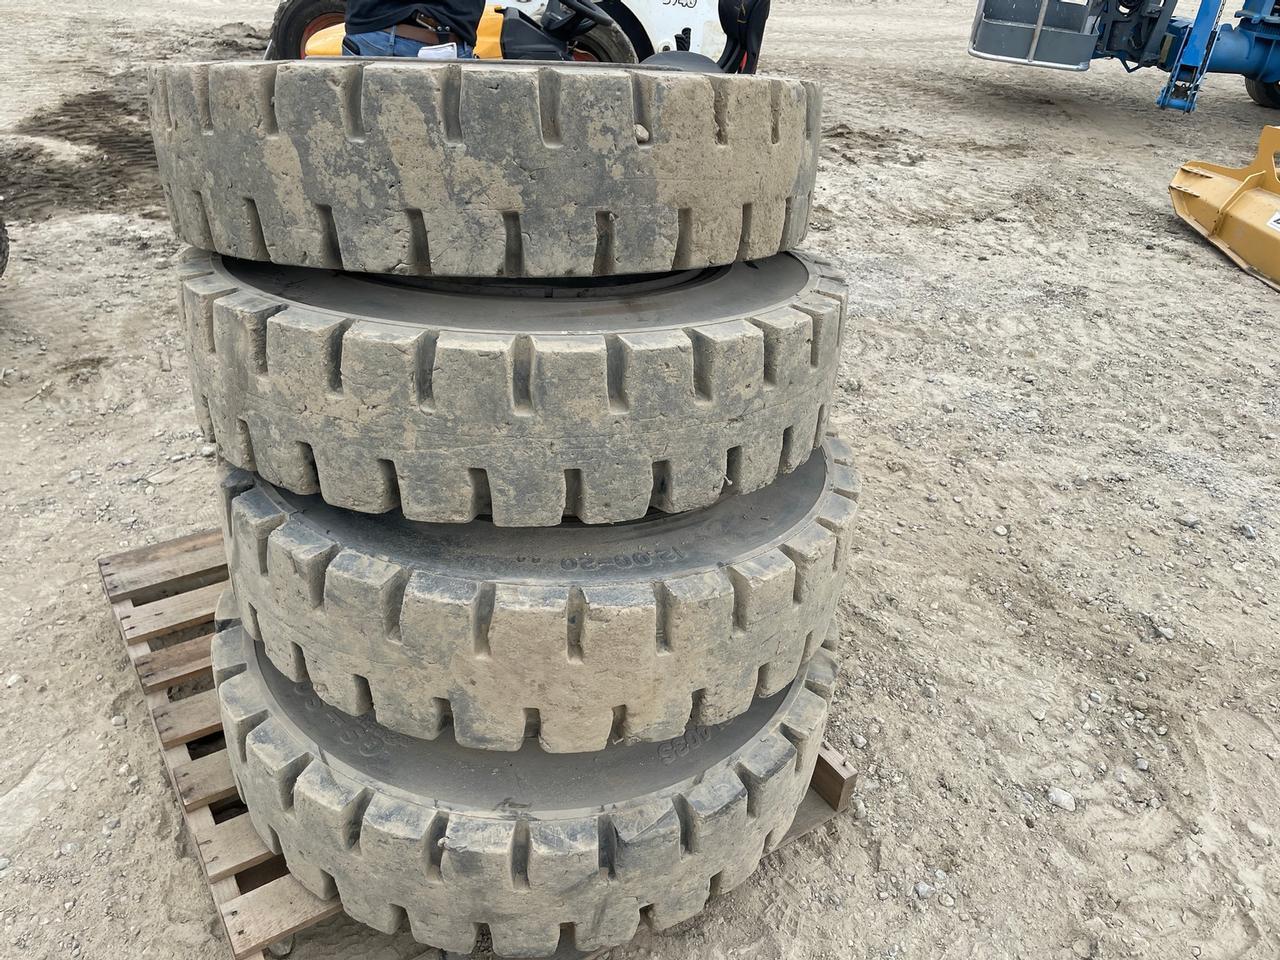 CL403S Industrial Tires